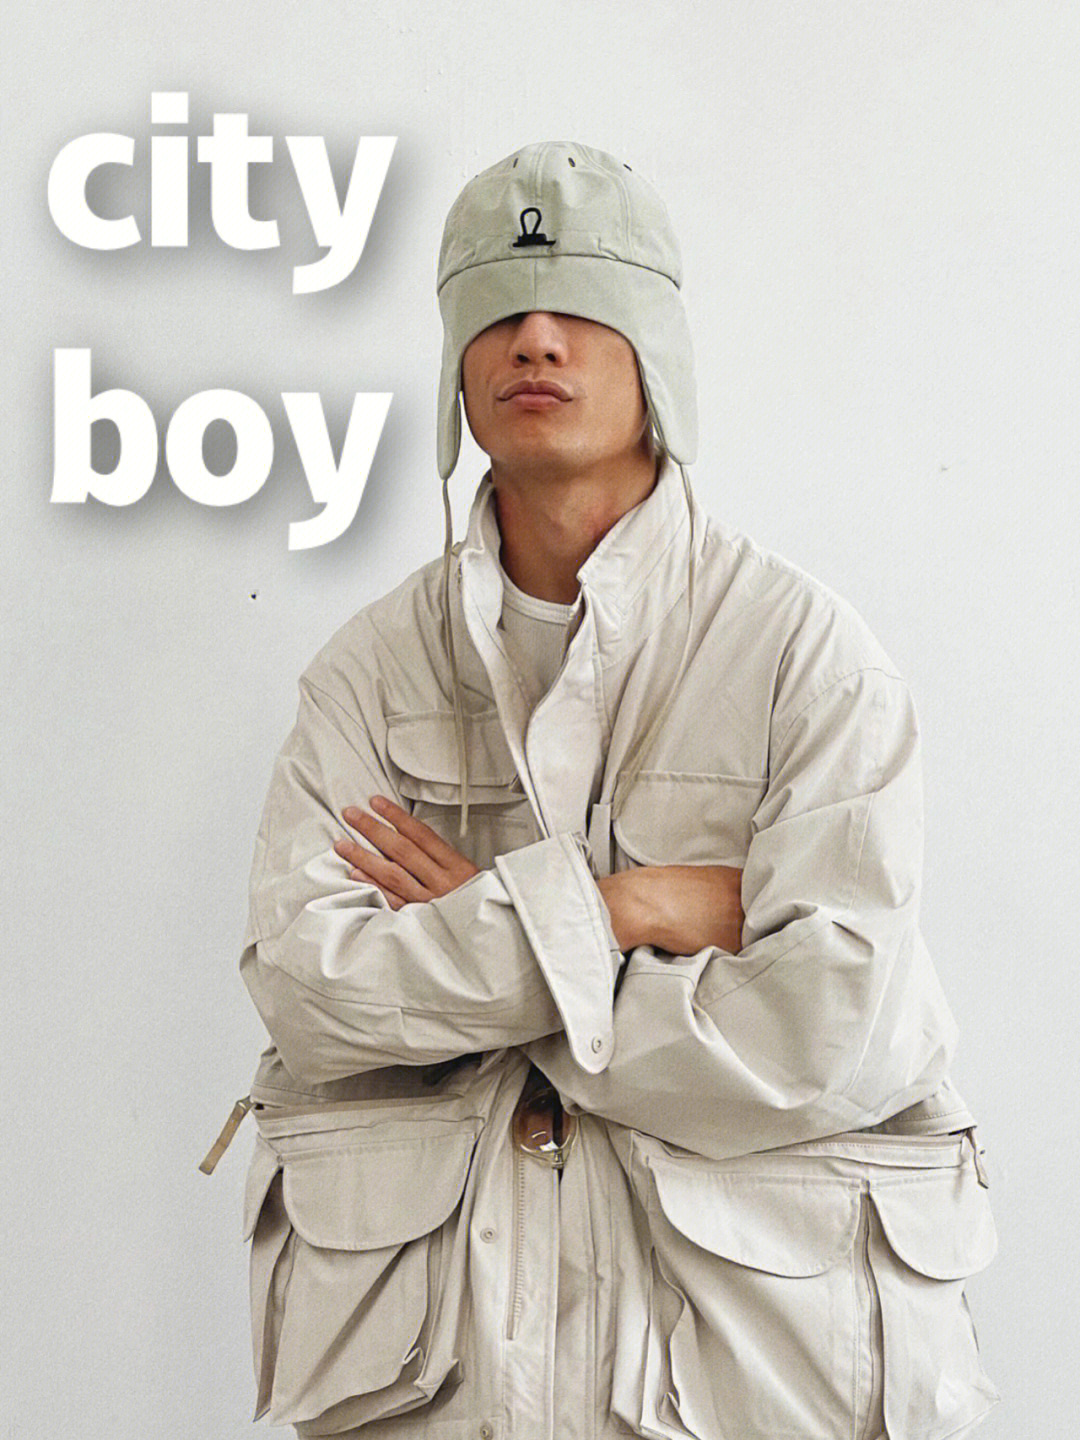 boy这种风格是由日本潮流杂志《popeye》开创的,city boy大多是以叠